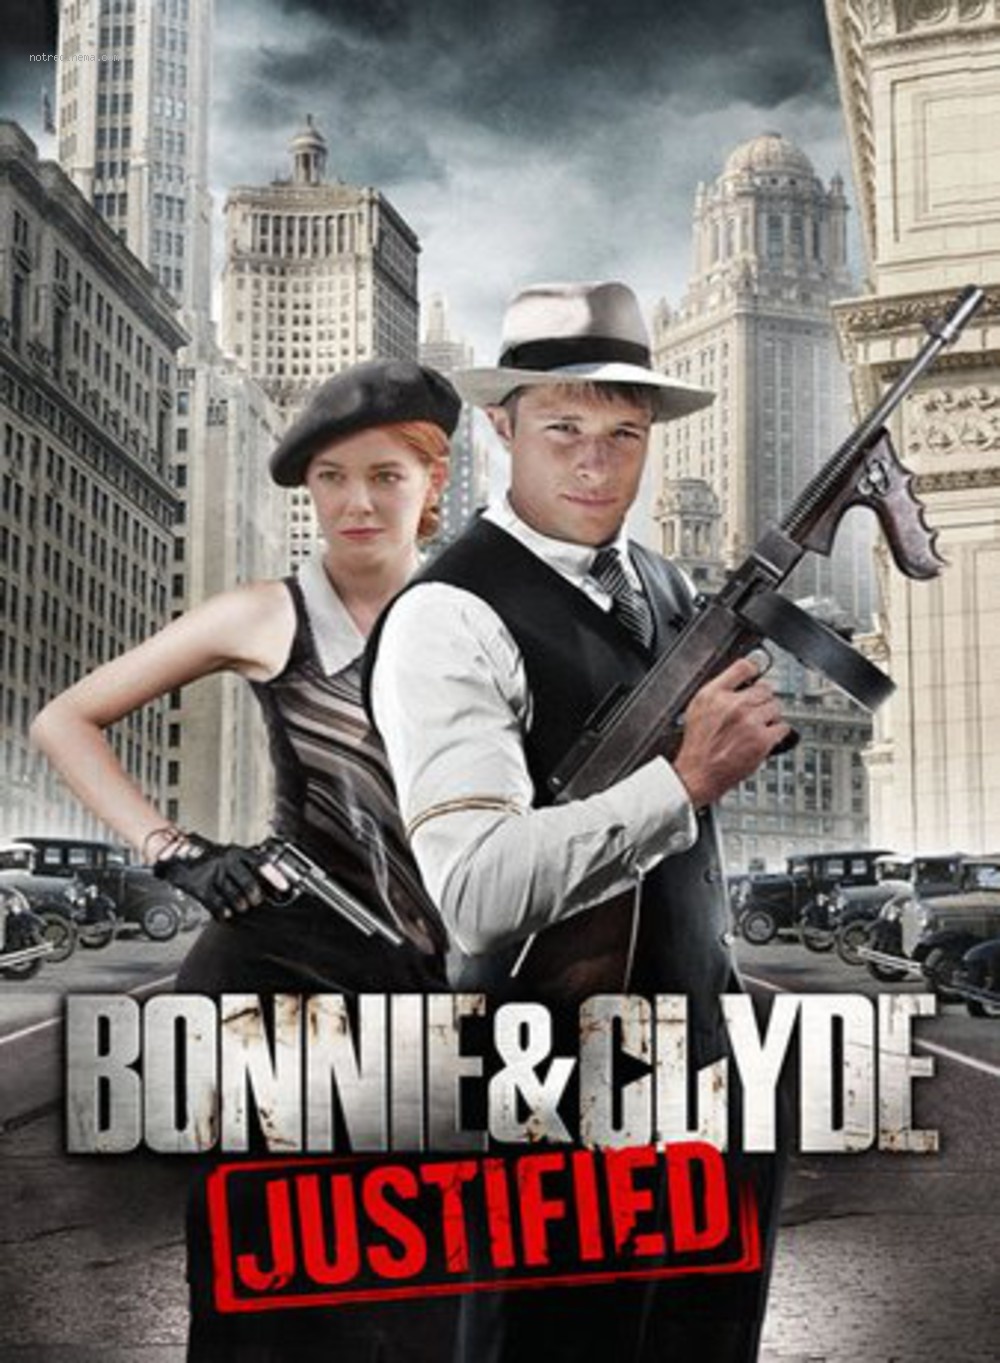 affiche du film Bonnie & Clyde: Justified